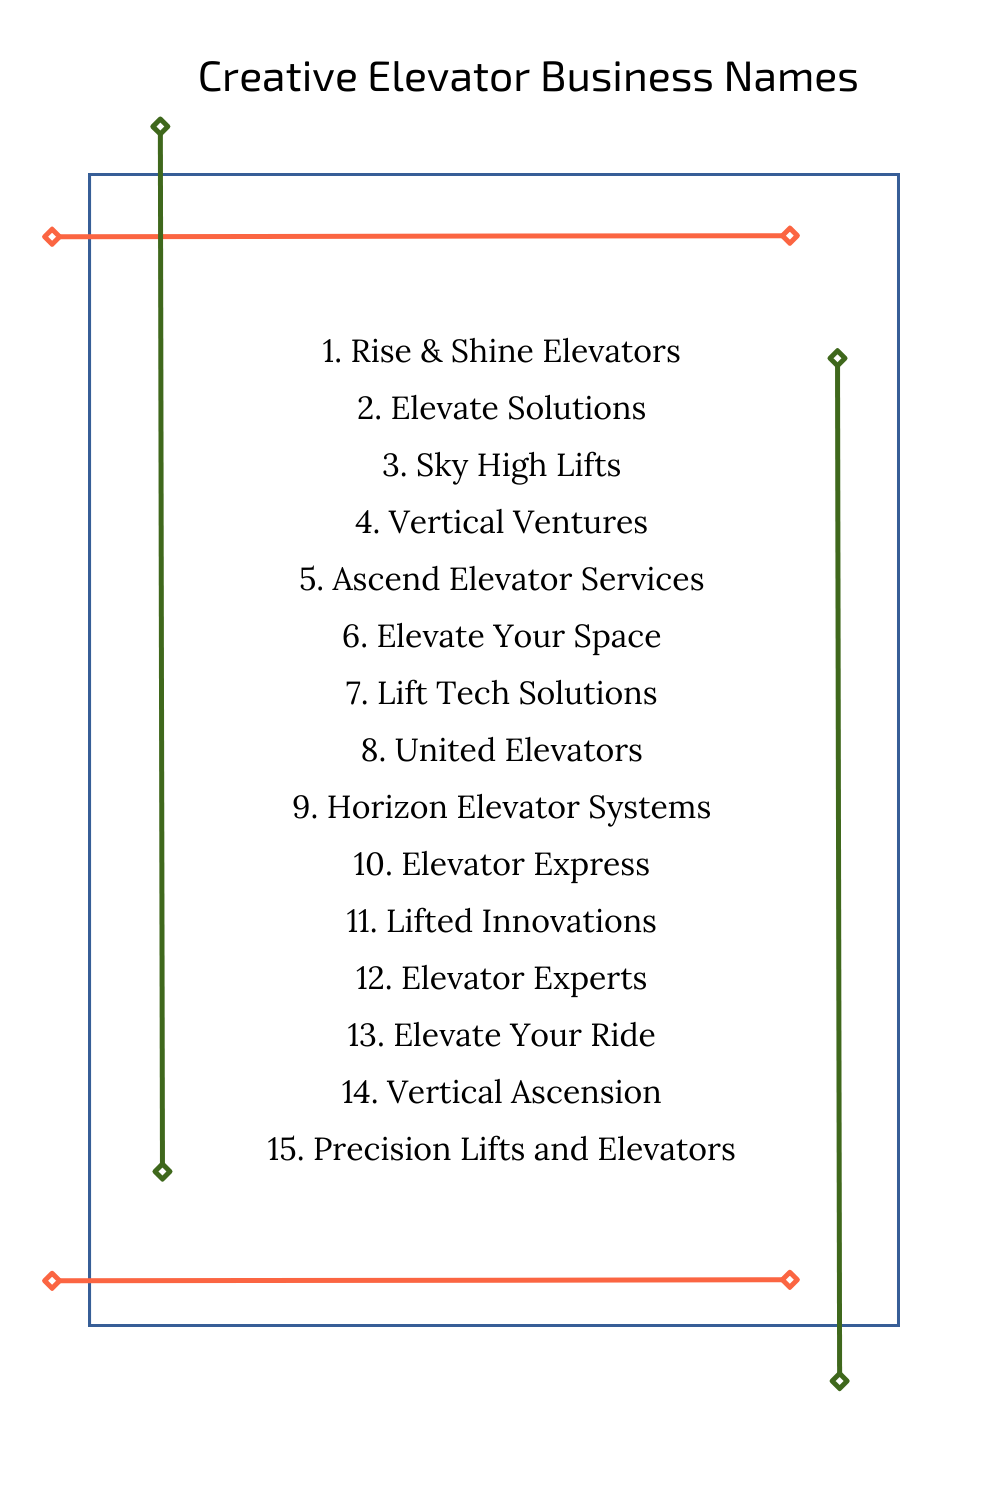 Creative Elevator Business Names